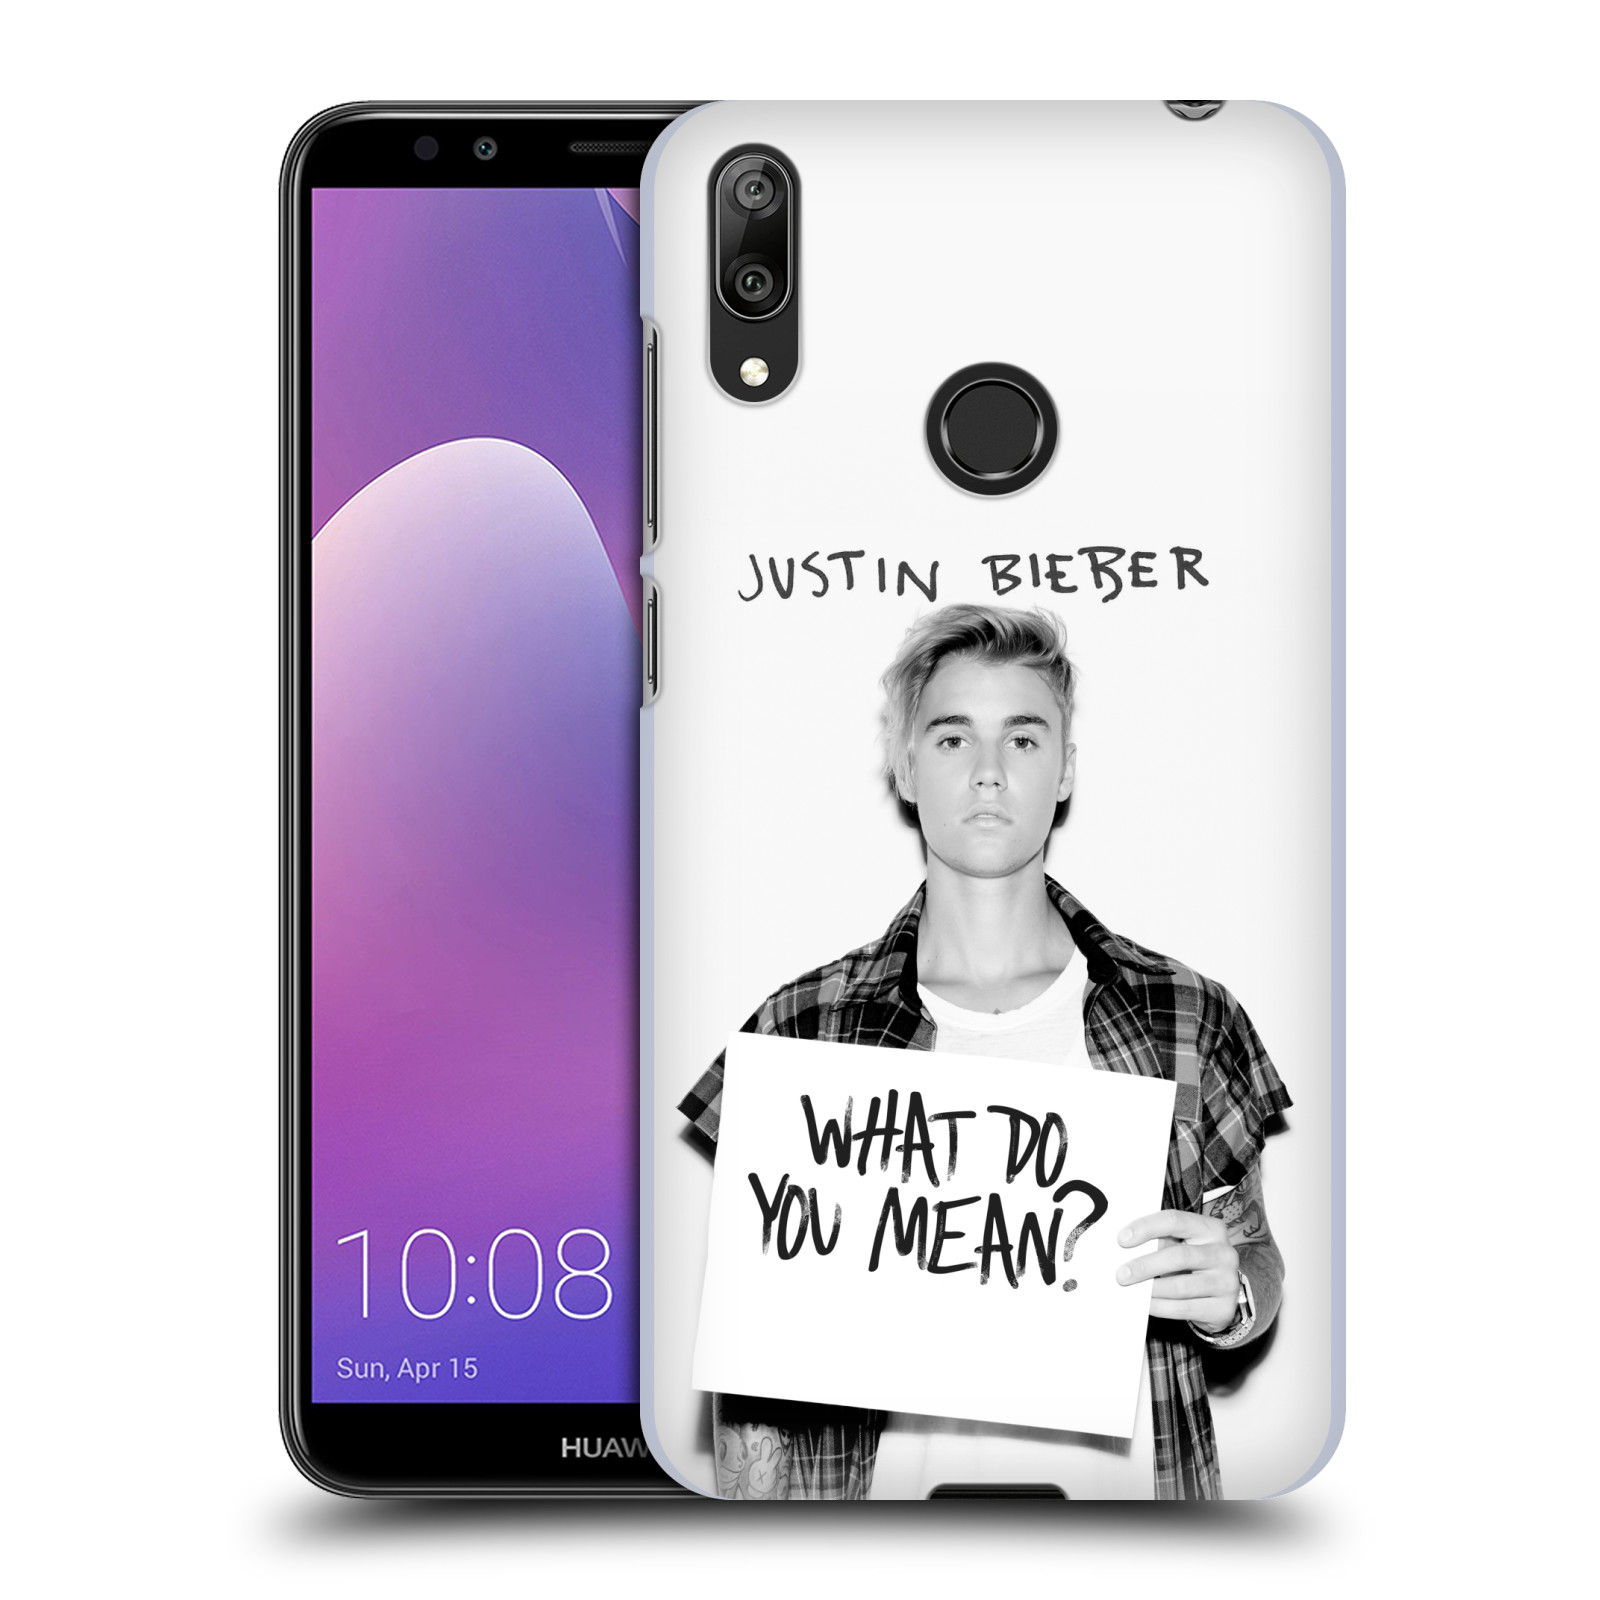 Pouzdro na mobil Huawei Y7 2019 - Head Case - Justin Bieber foto Purpose What do you mean